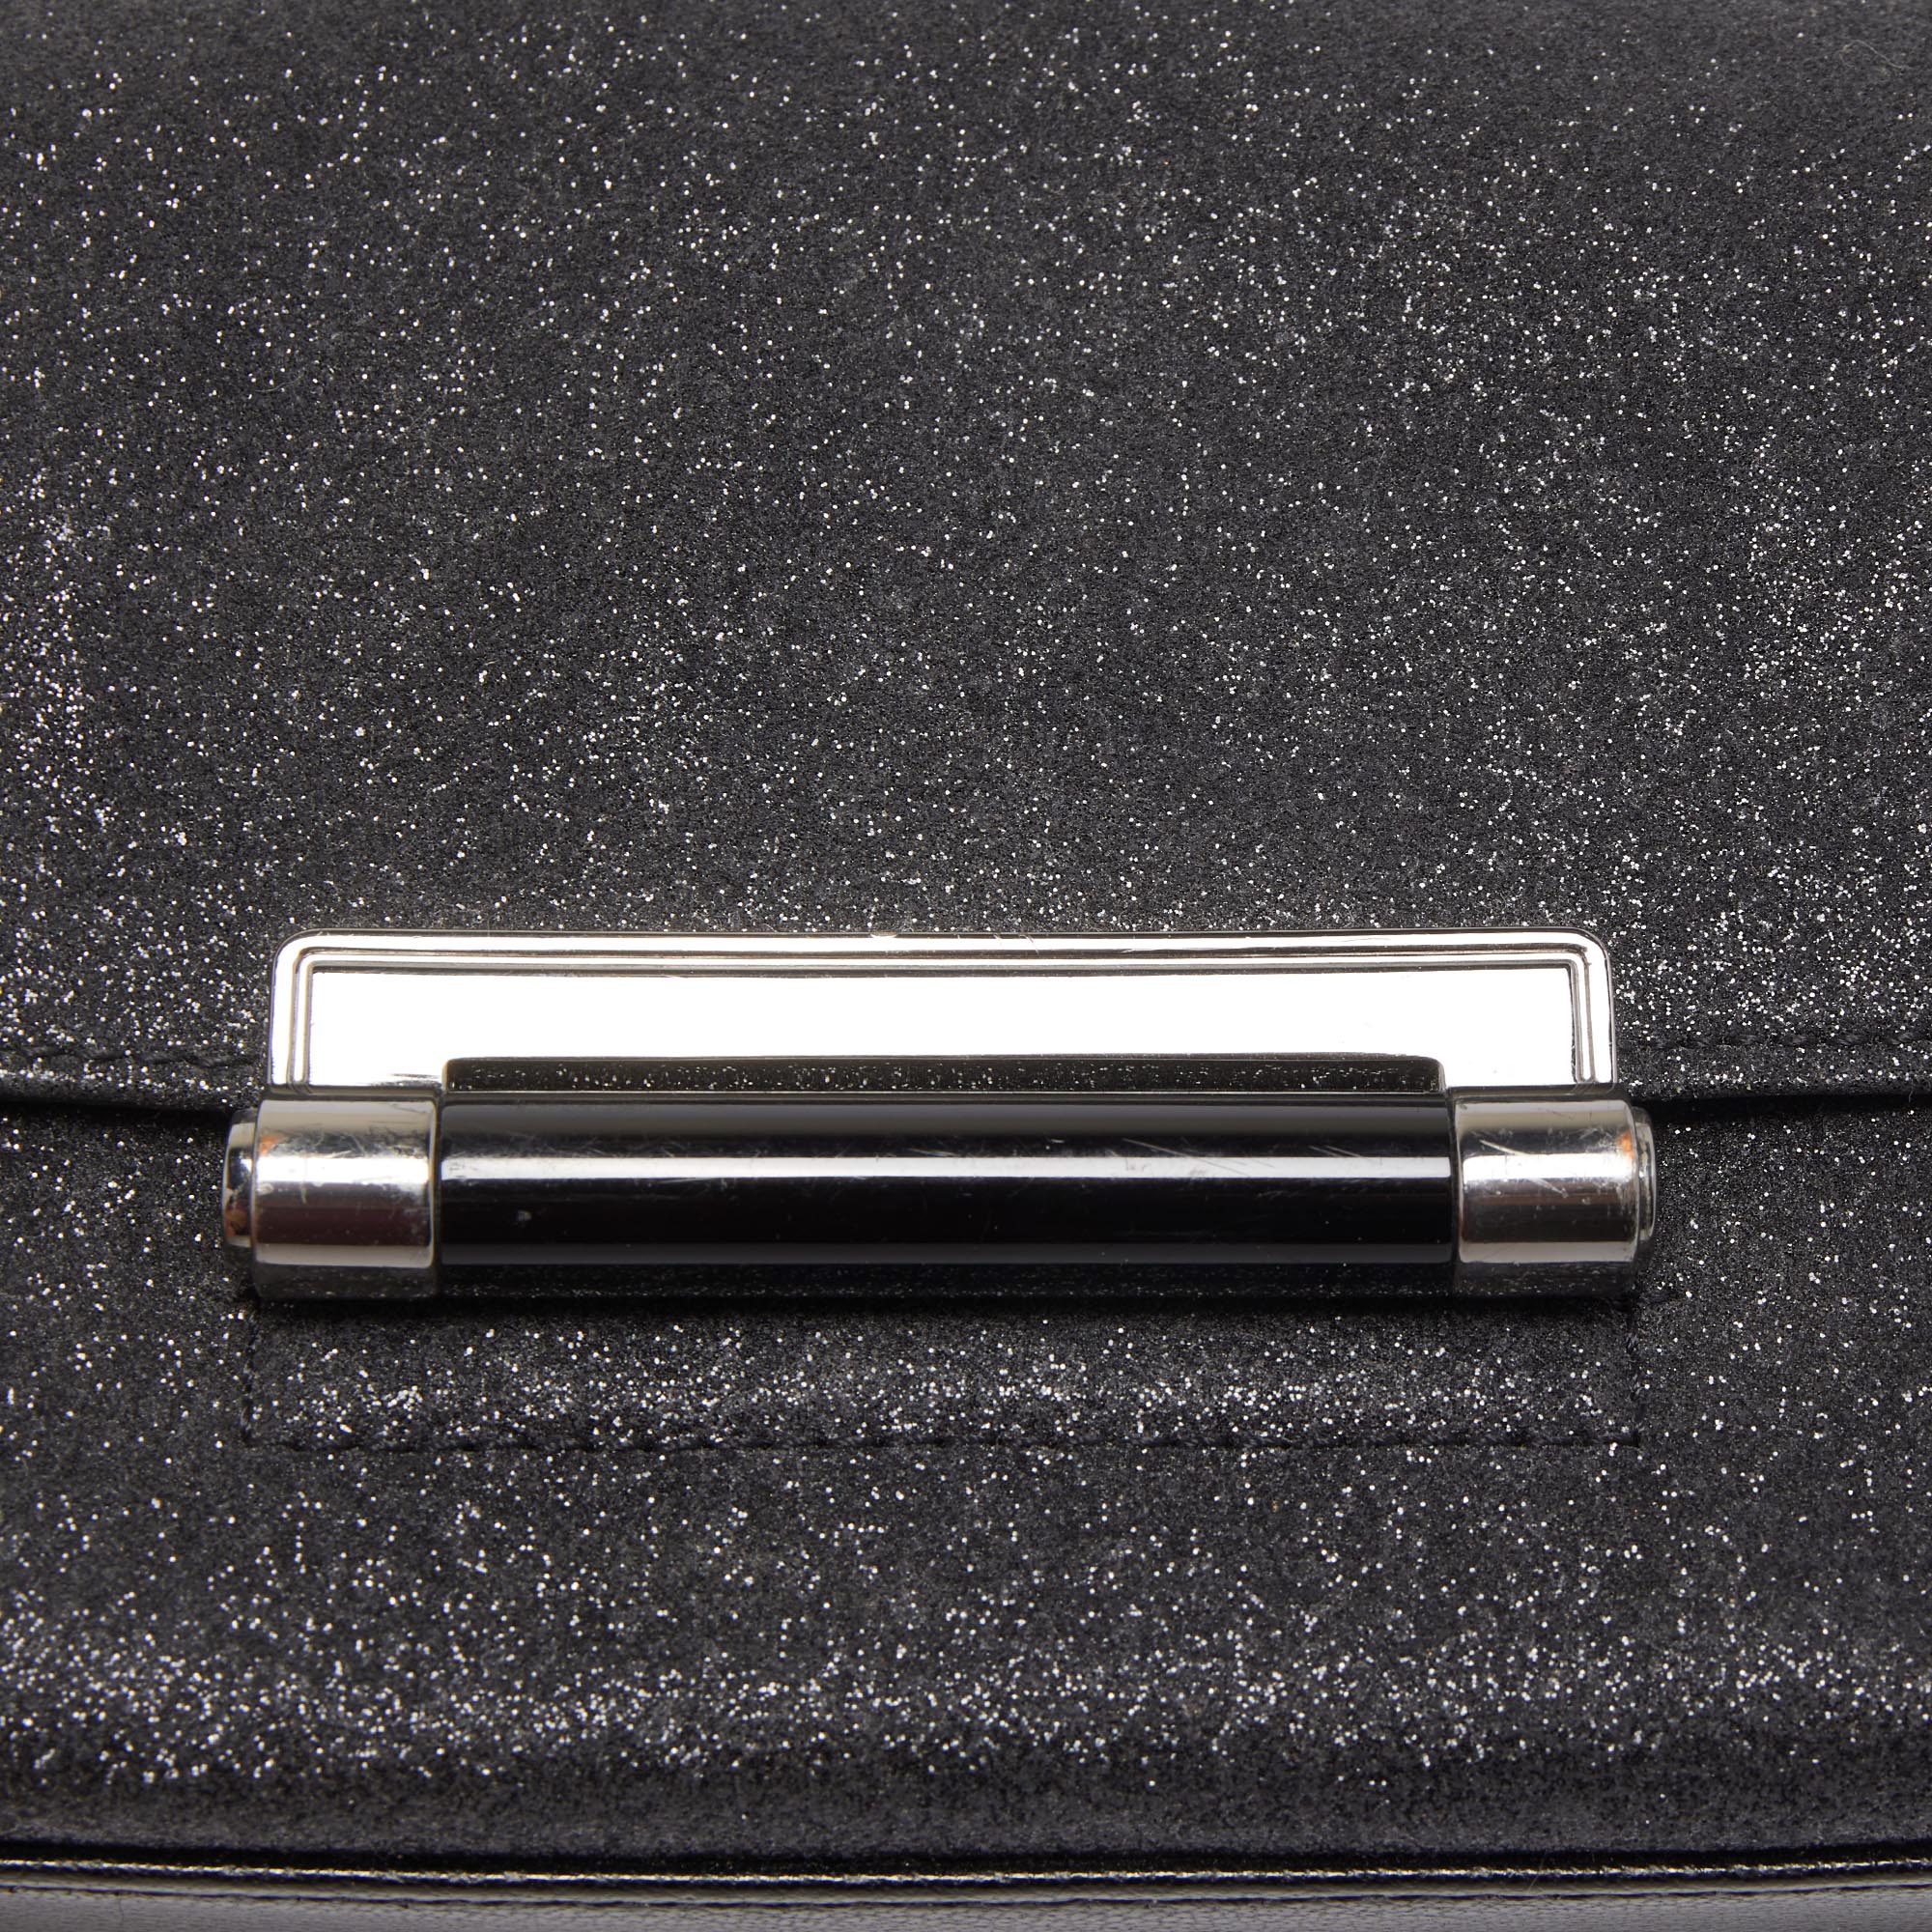 Diane Von Furstenberg Black Glitter Leather Mirco Mini 440 Shoulder Bag